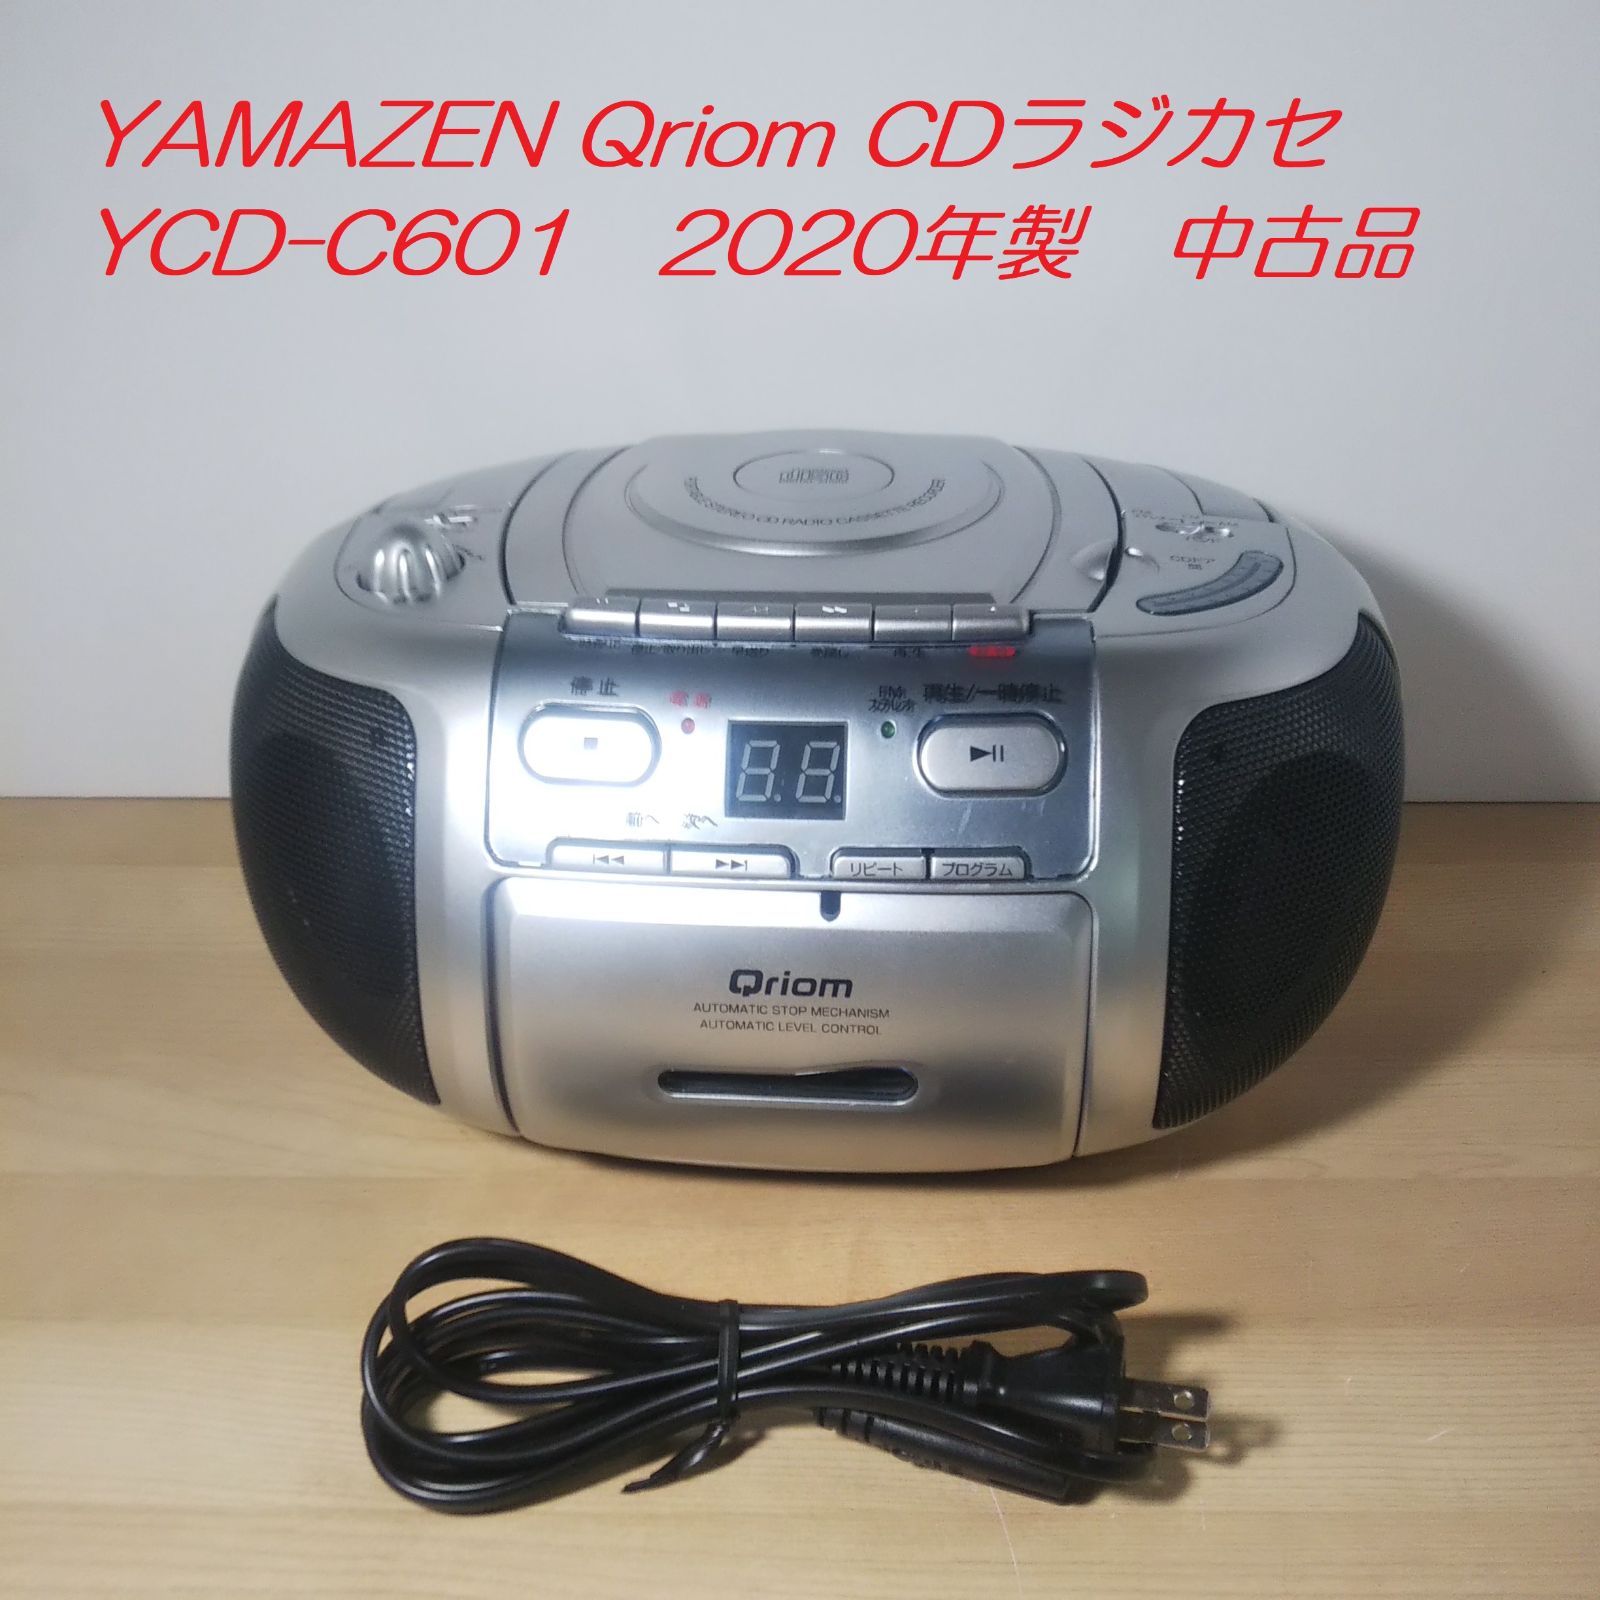 YAMAZEN Qriom CDラジカセ YCD-C601 2020年製 中古品 - メルカリ